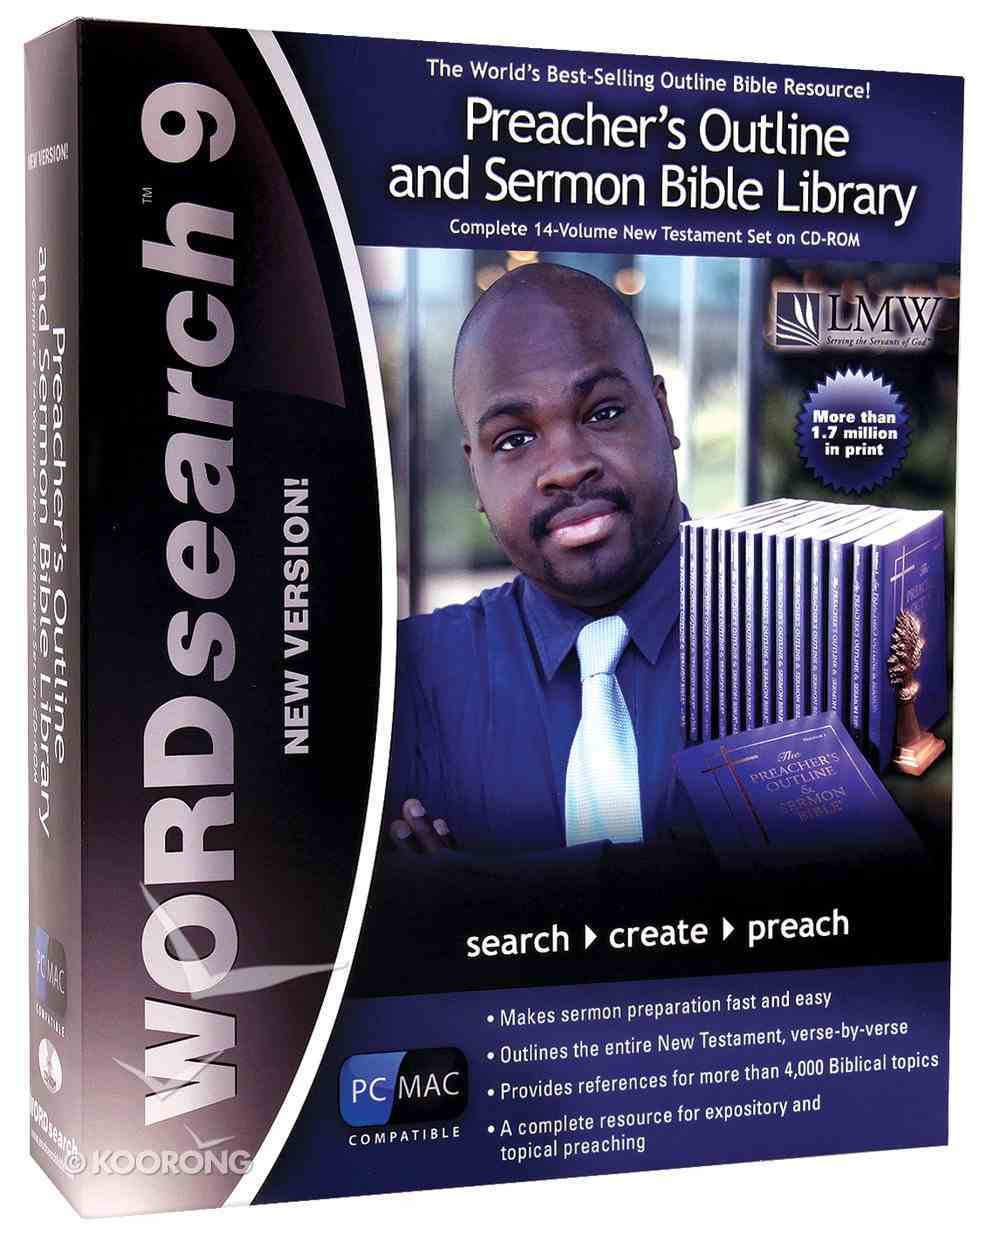 bible software for mac